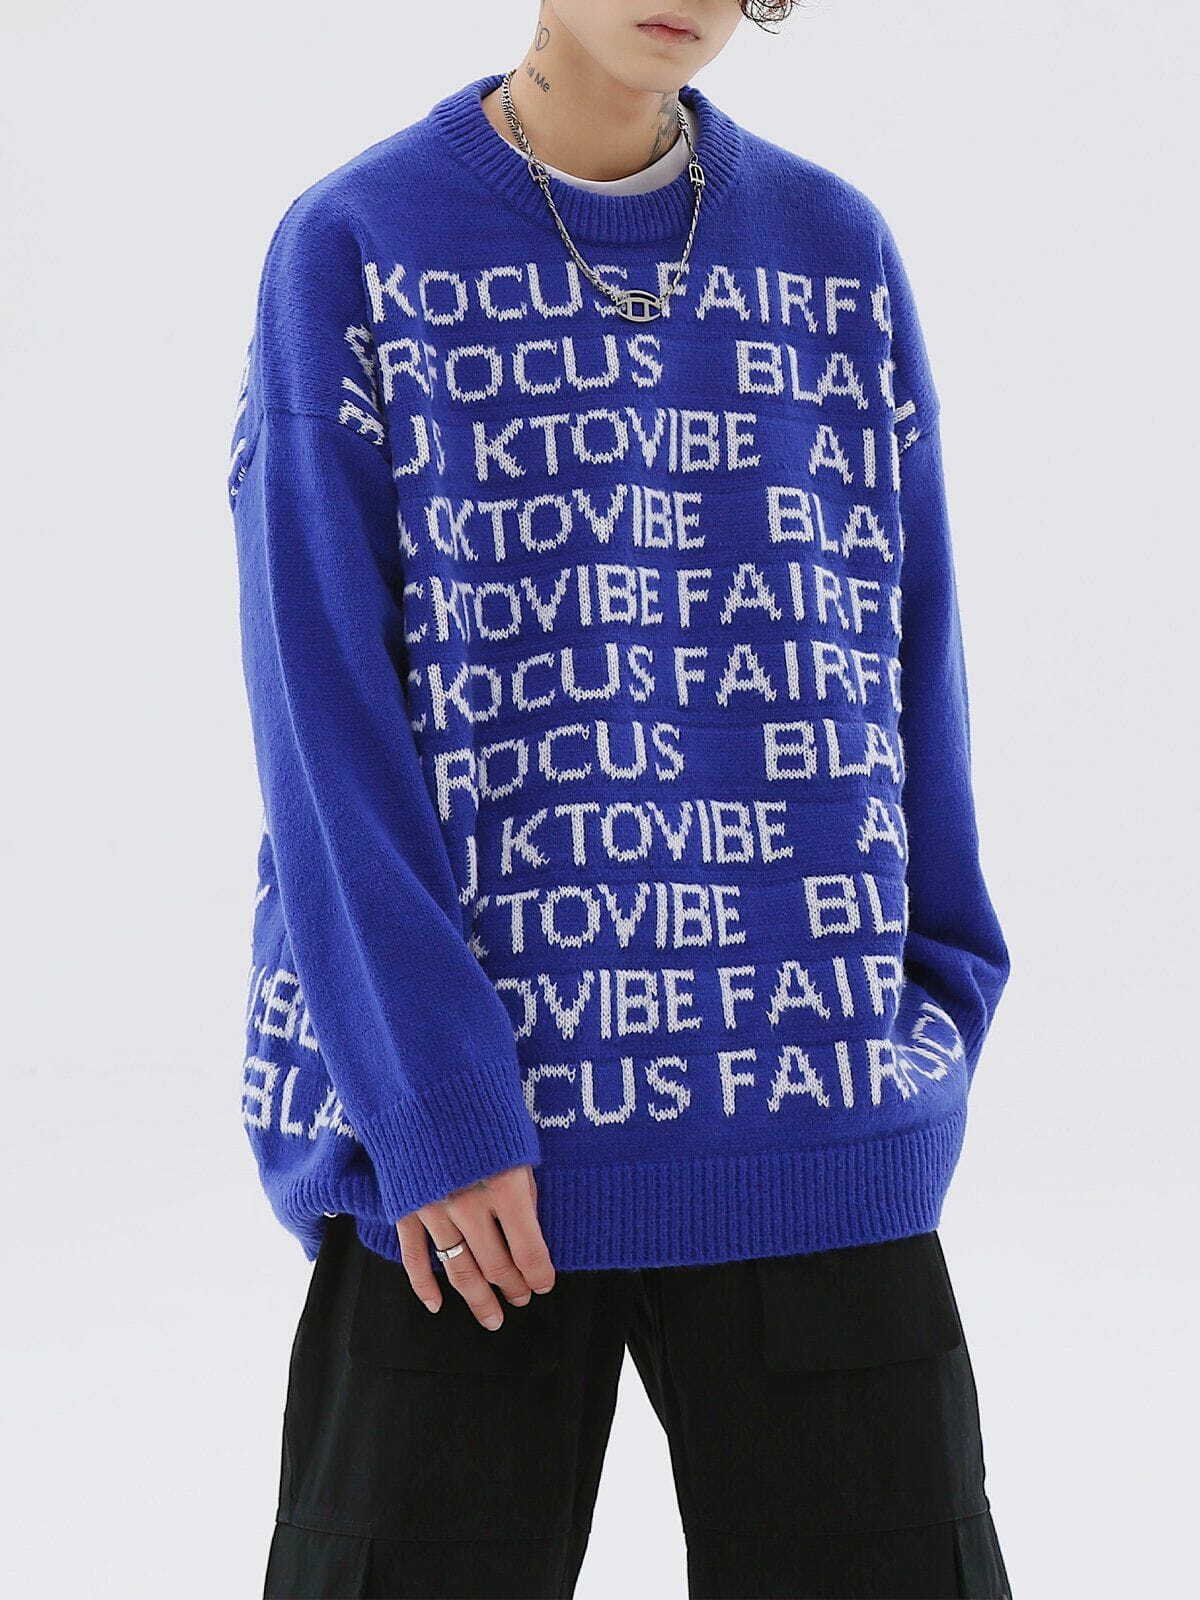 retro alphabet sweater edgy & vibrant streetwear 4949